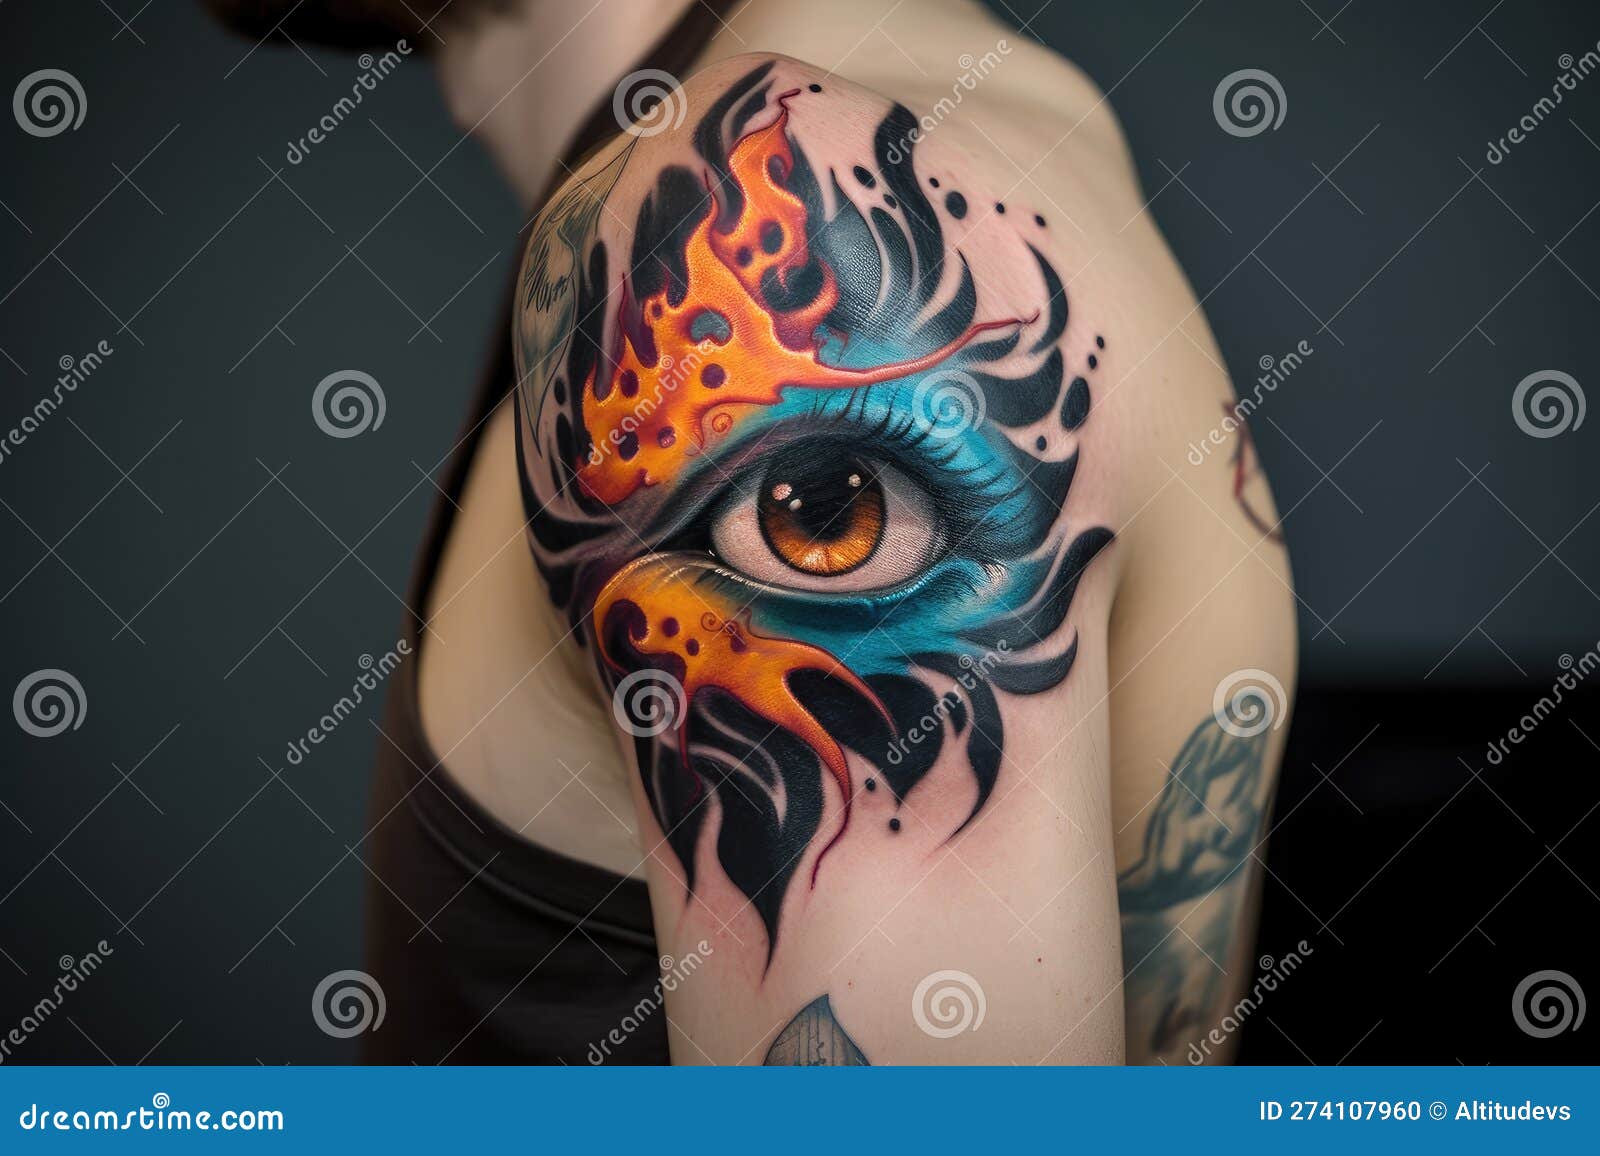 Evil Eye Inspired Tattoo Design – Tattoos Wizard Designs